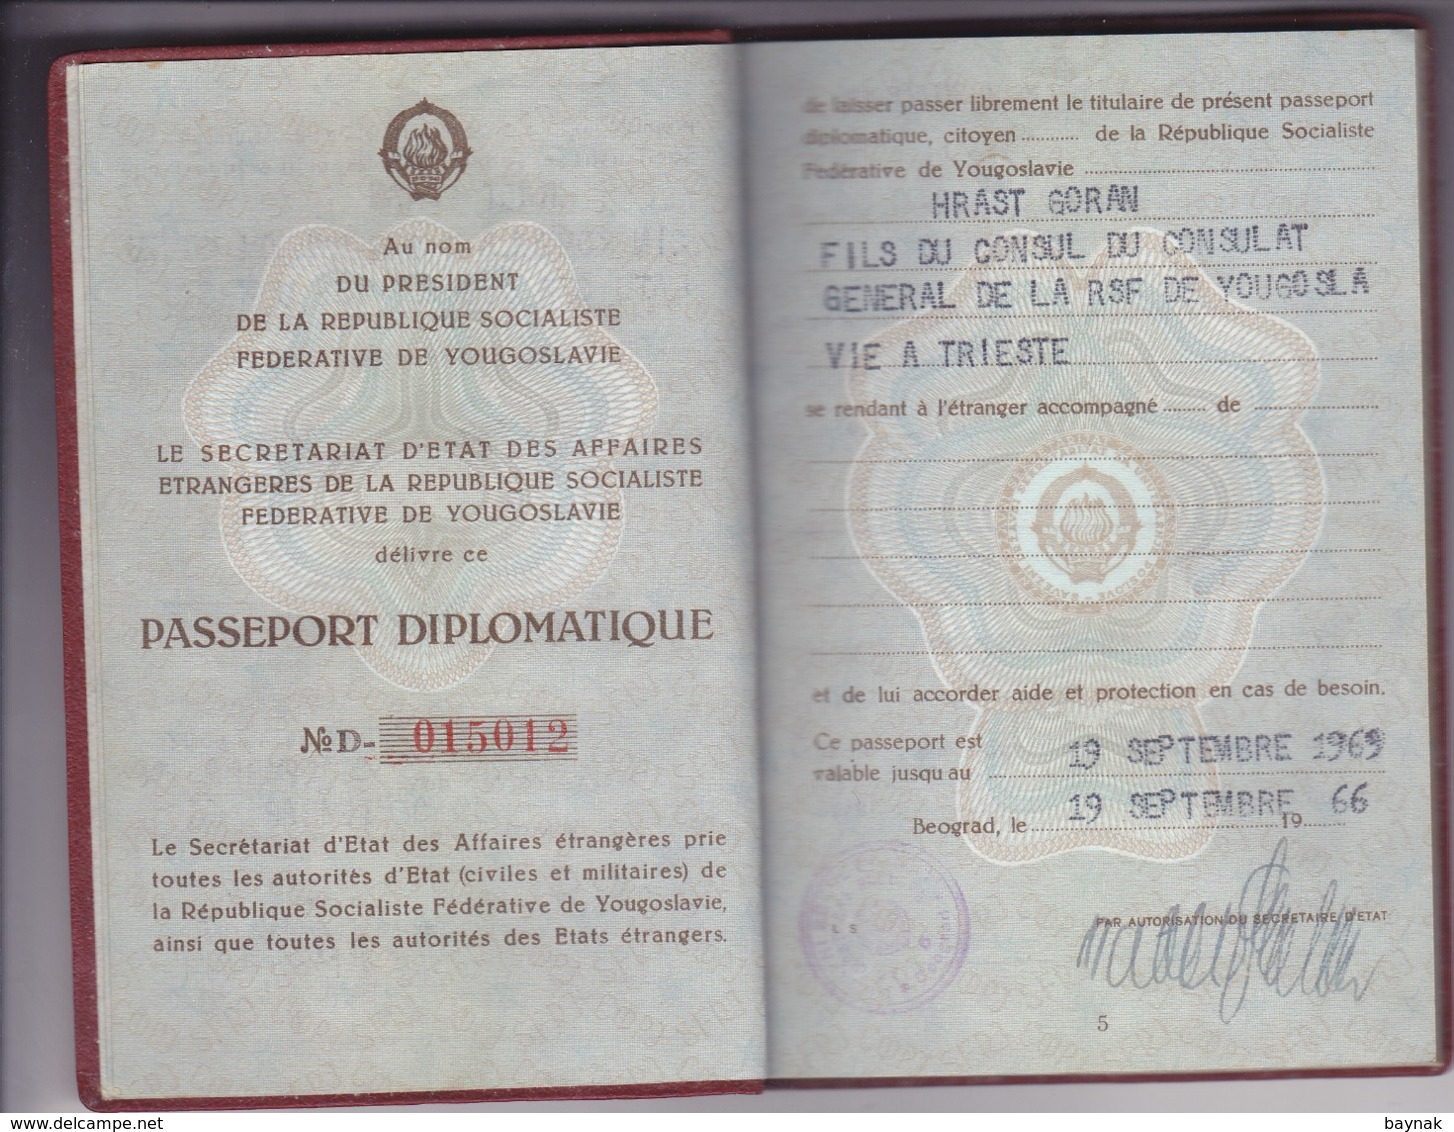 SFRJ  - YUGOSLAVIA  - DIPLOMATIC PASSPPORT  - SON OF YU CONSUL IN TRIESTE, ITALIA  - 1969  - DIPLOMATIC VISA  3 YEAR - Historische Dokumente